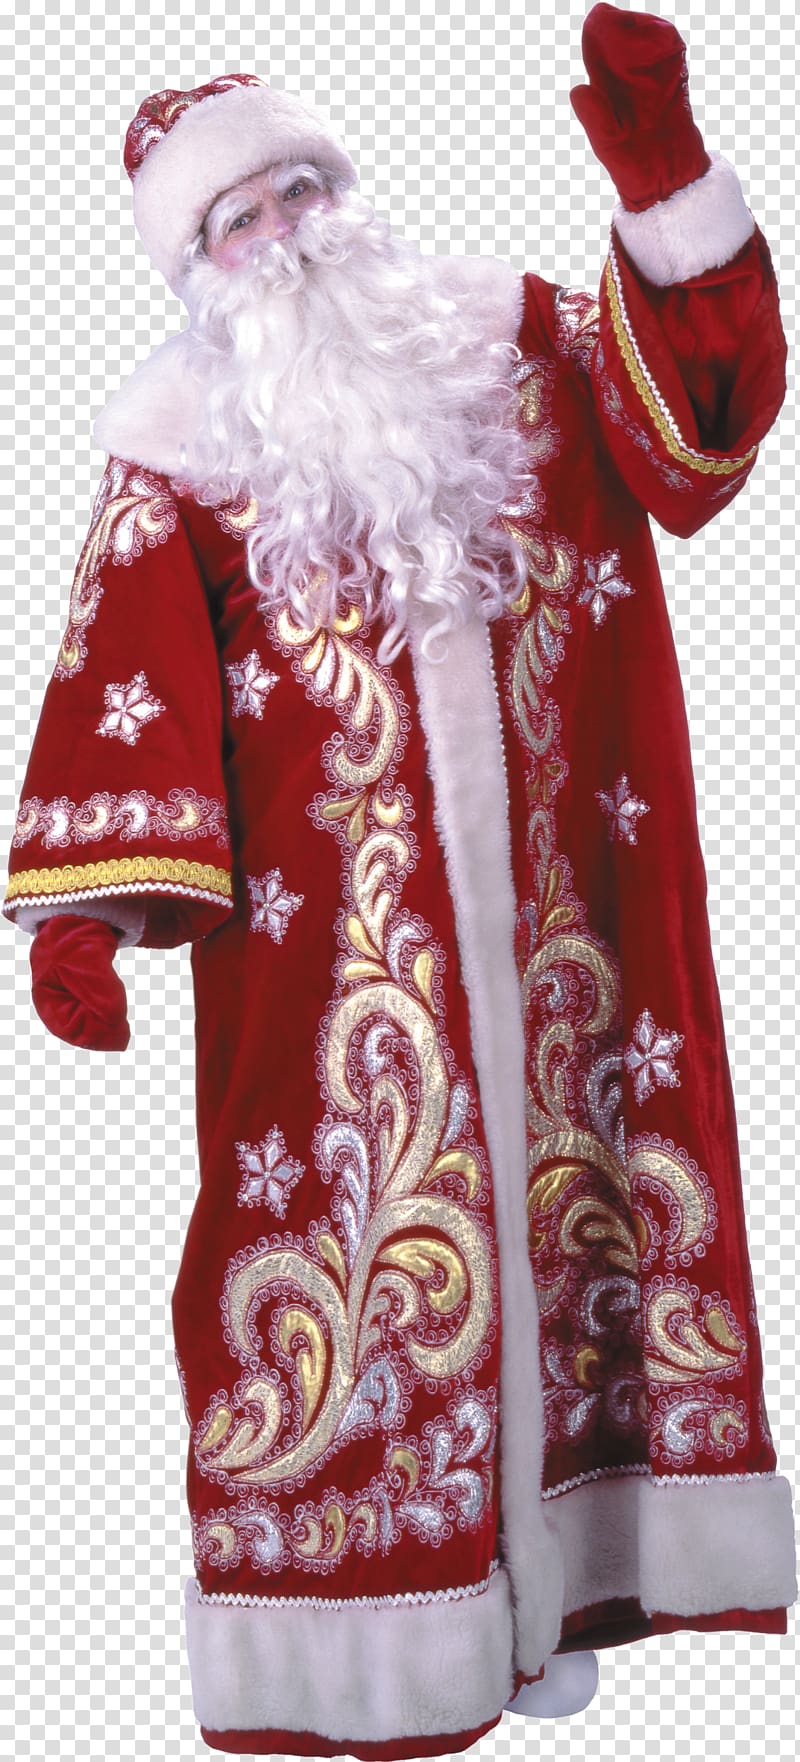 Ded Moroz Snegurochka New Year tree Santa Claus, Khanda transparent background PNG clipart